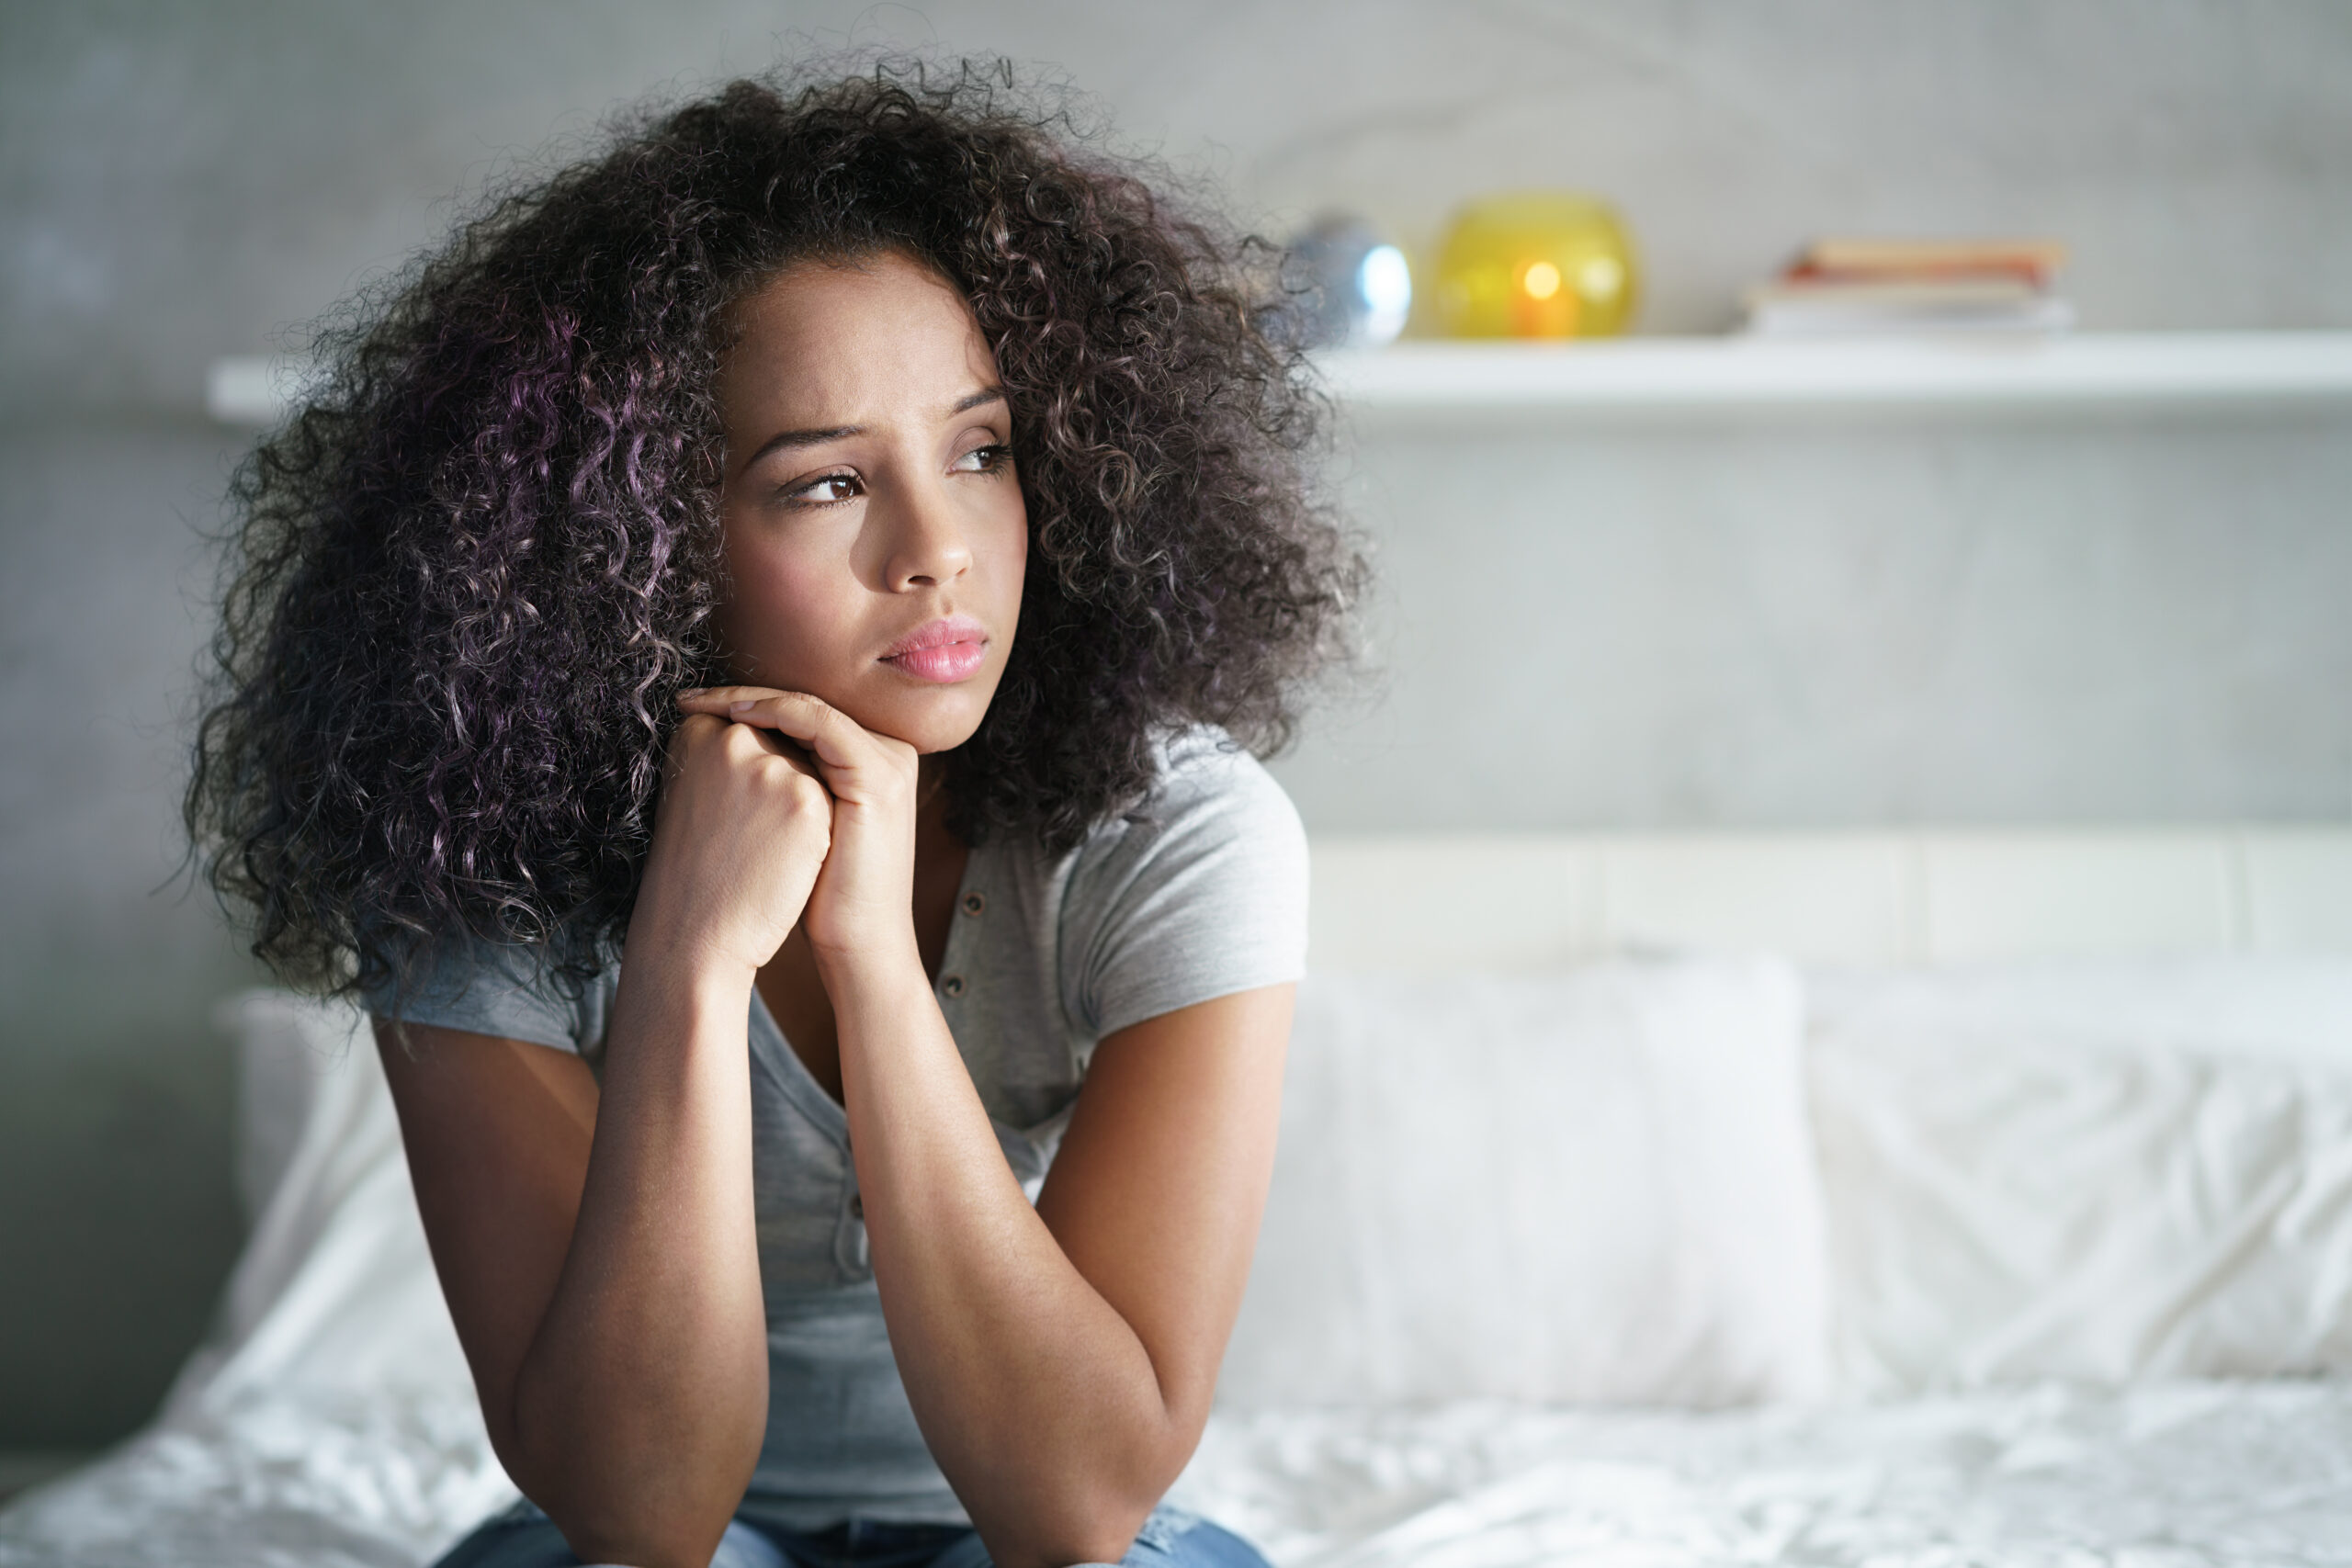 A sad black woman | Source: Shutterstock